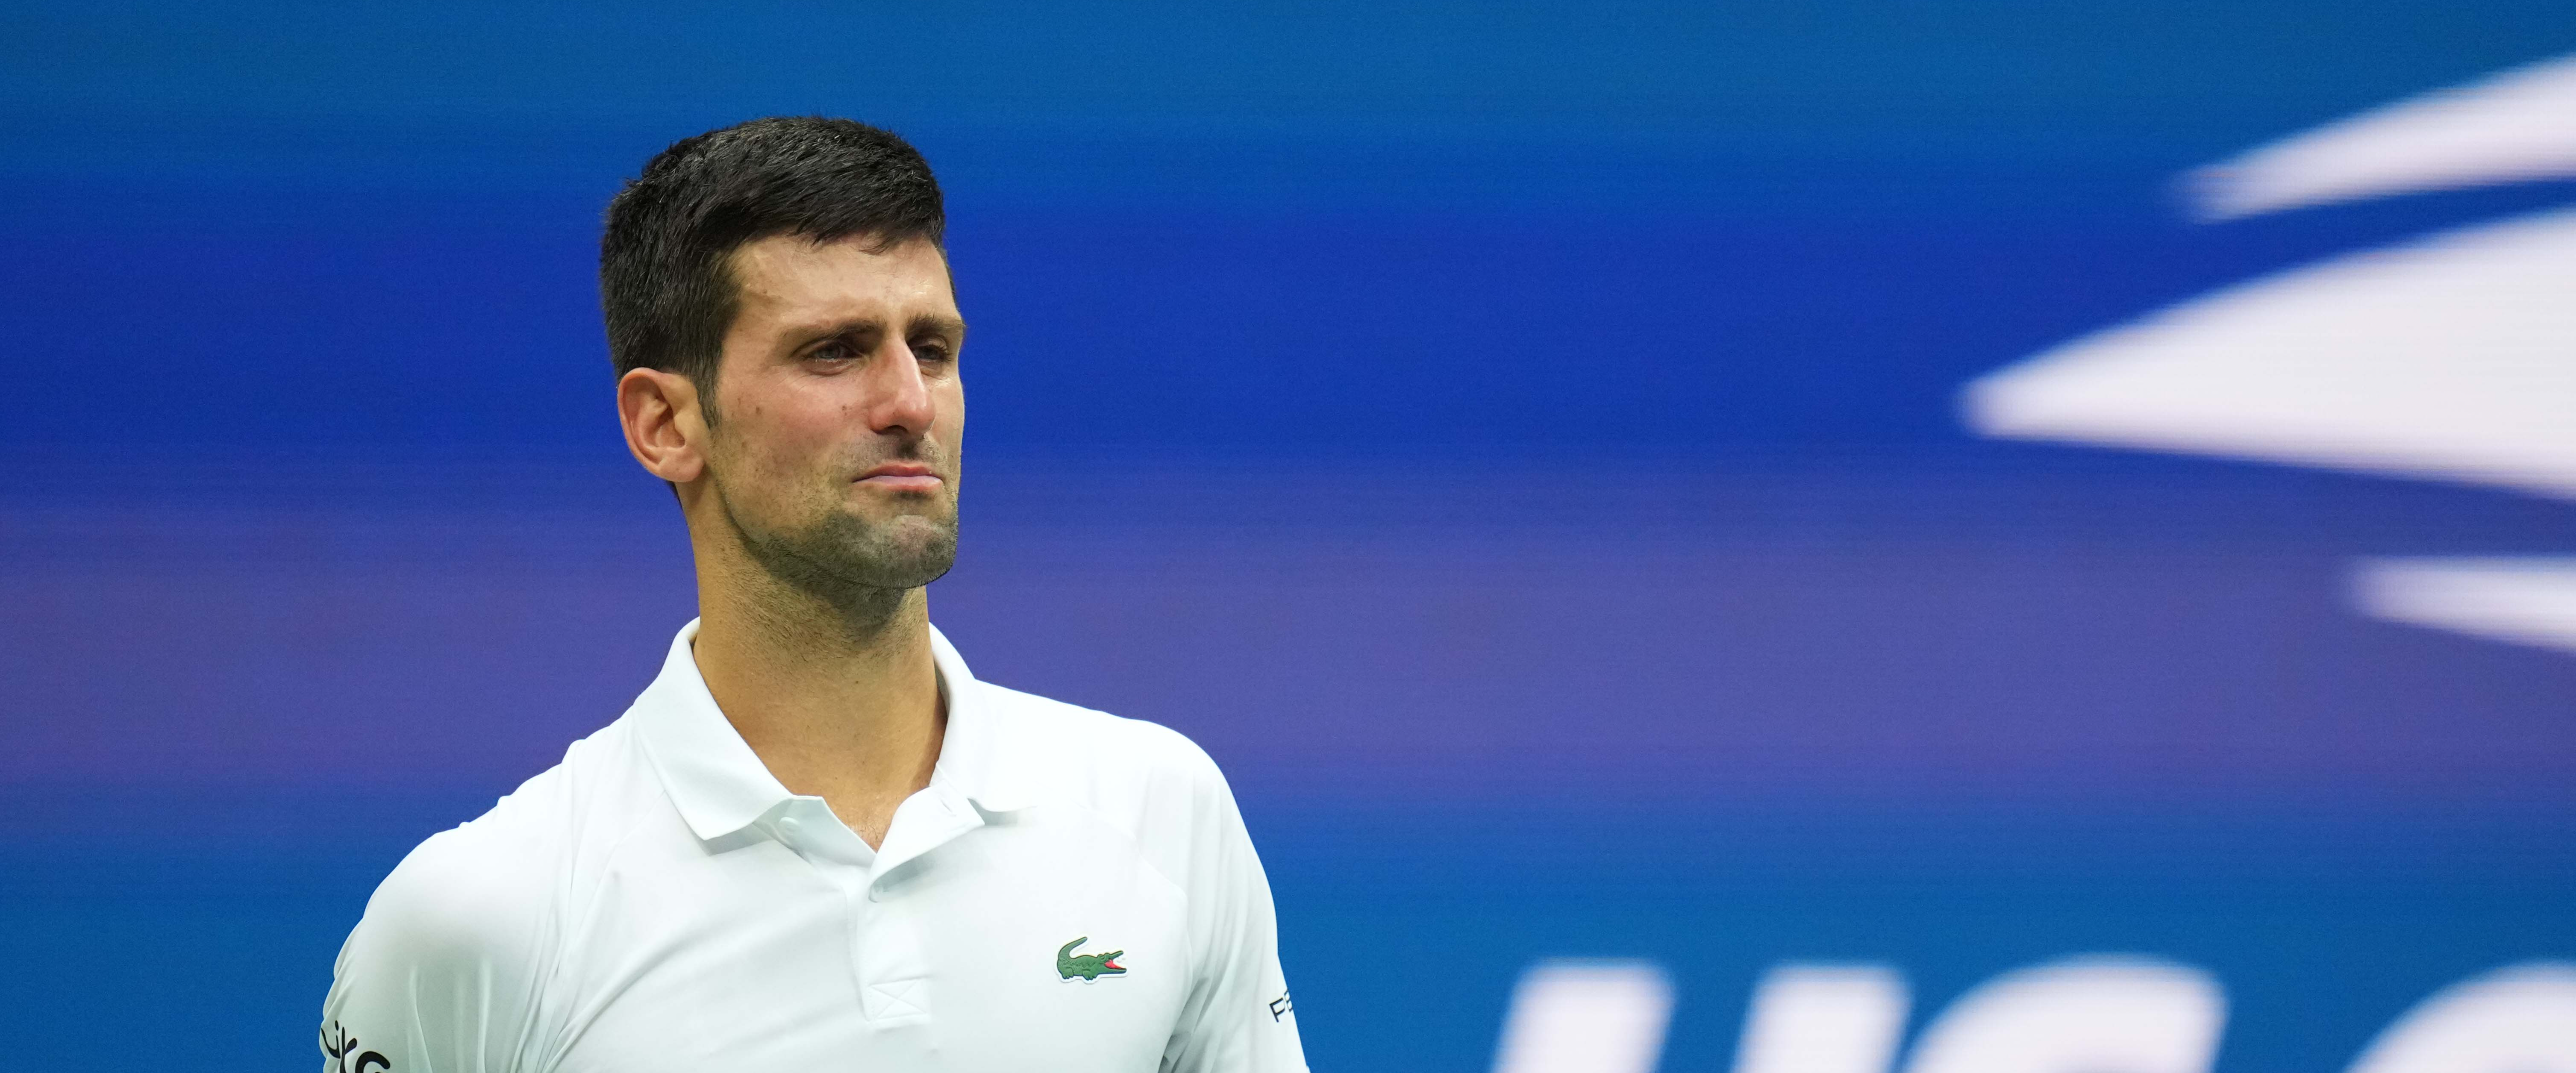 The Australian Open allowing Novak Djokovic to participate is embarassing